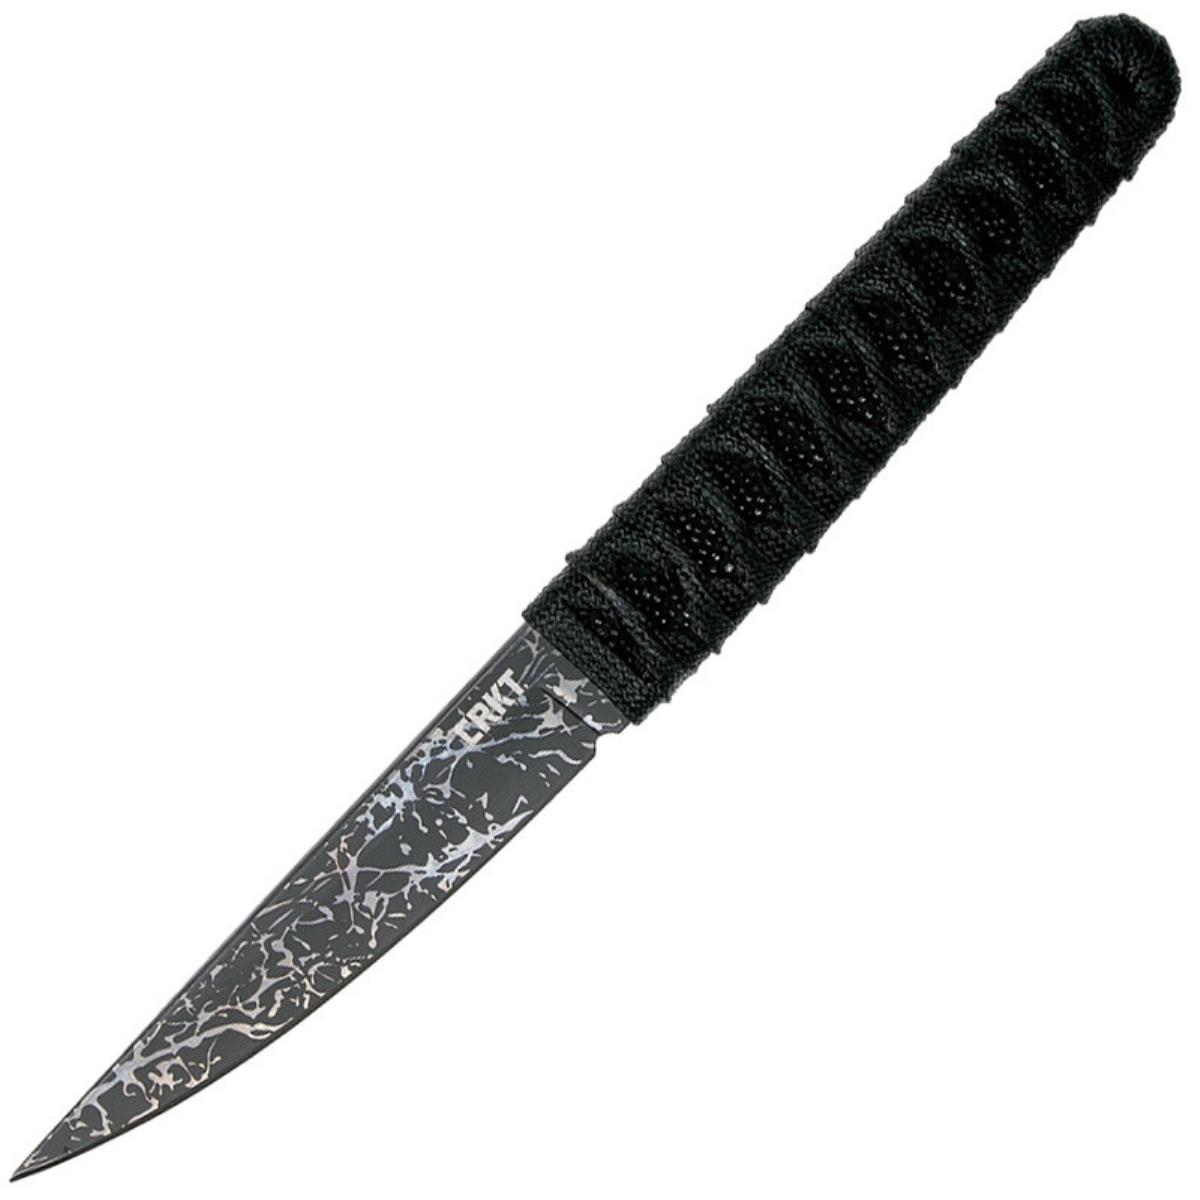 Нож Obake с фикс. клинком, рук-ть паракорд, клинок 8Cr14MoV, пластик. ножны  CRKT_2367 трость с клинком зебра